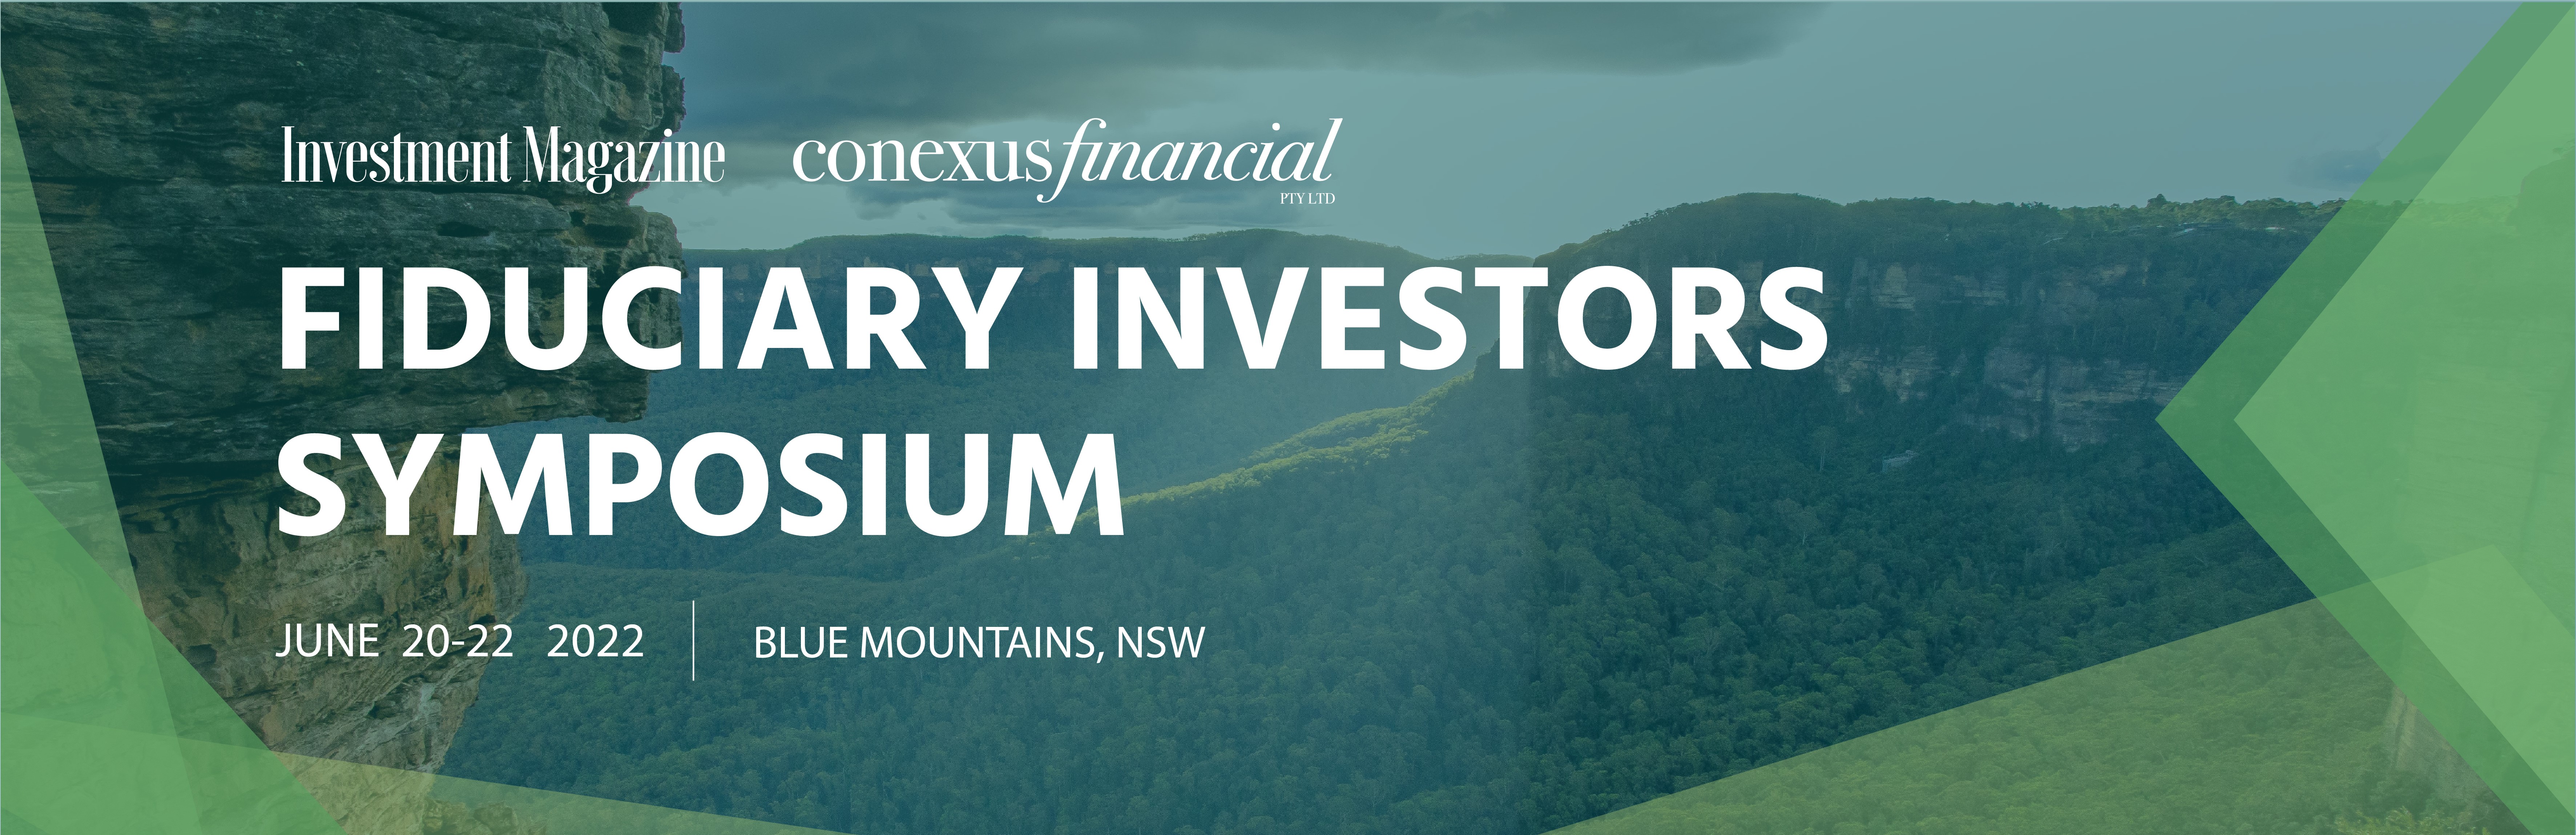 Fiduciary Investors Symposium